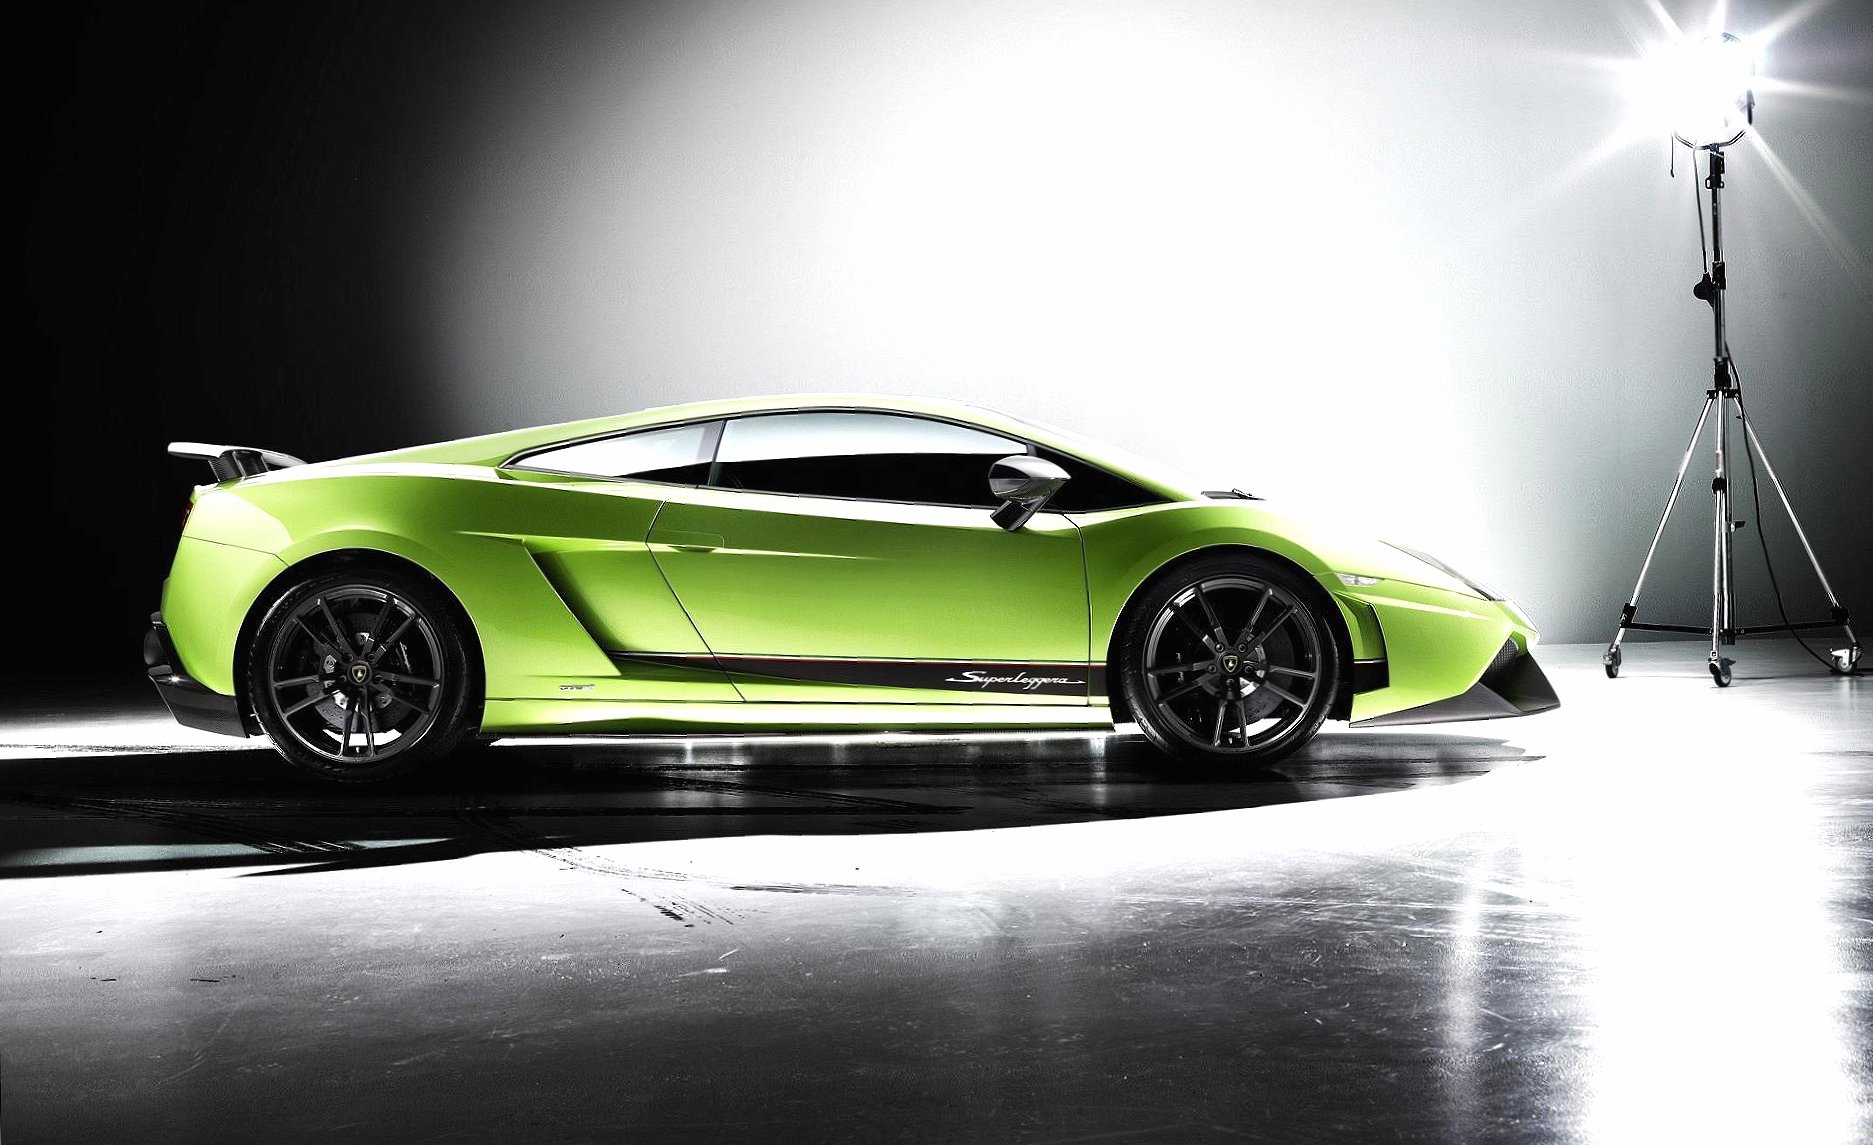 Lamborghini gallardo lp 570 4 superleggera at 2048 x 2048 iPad size wallpapers HD quality